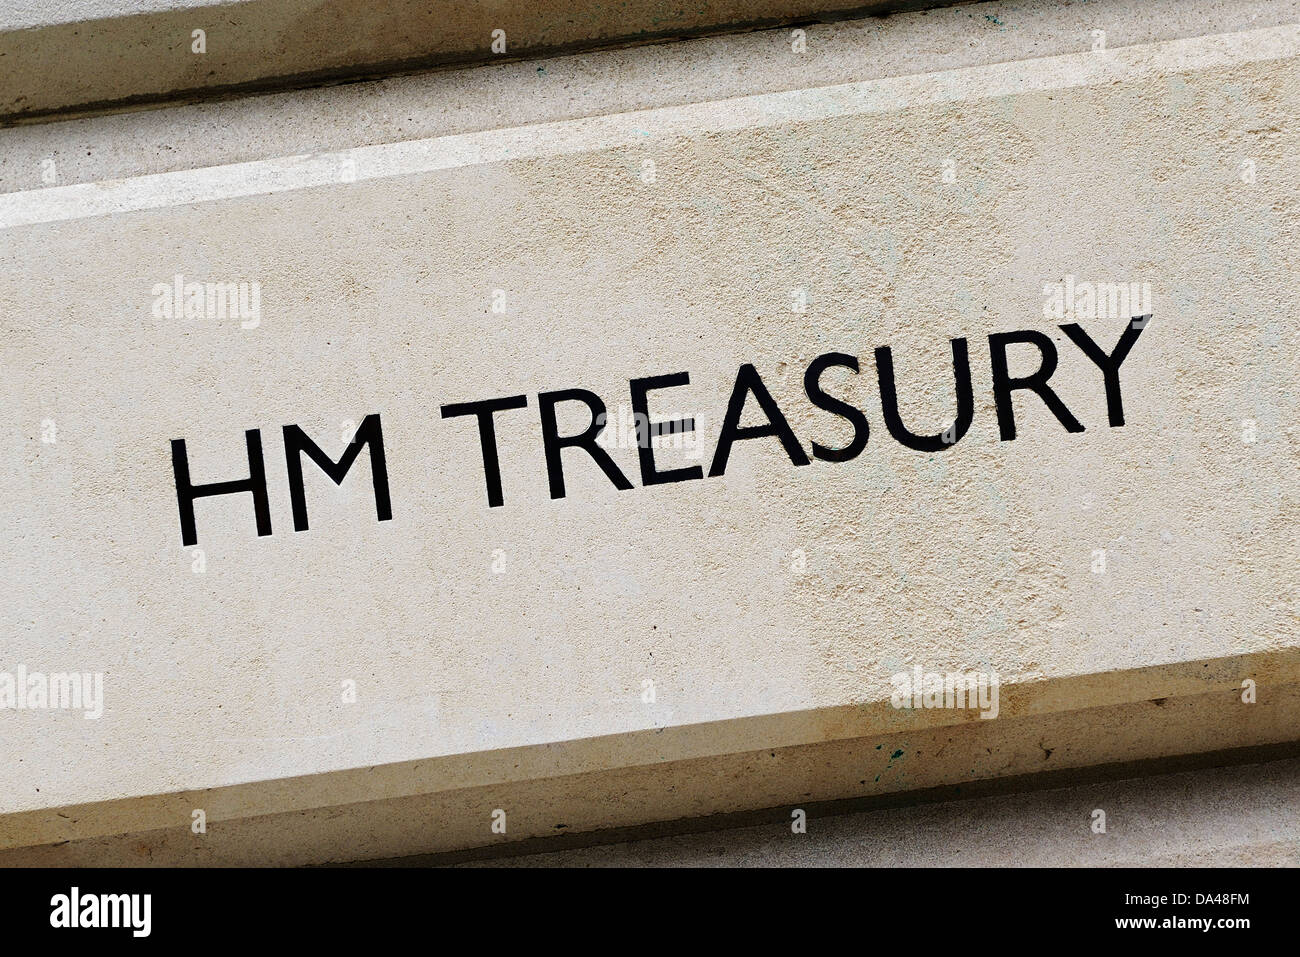 HM Treasury, Westminster, London, England, UK. Stock Photo